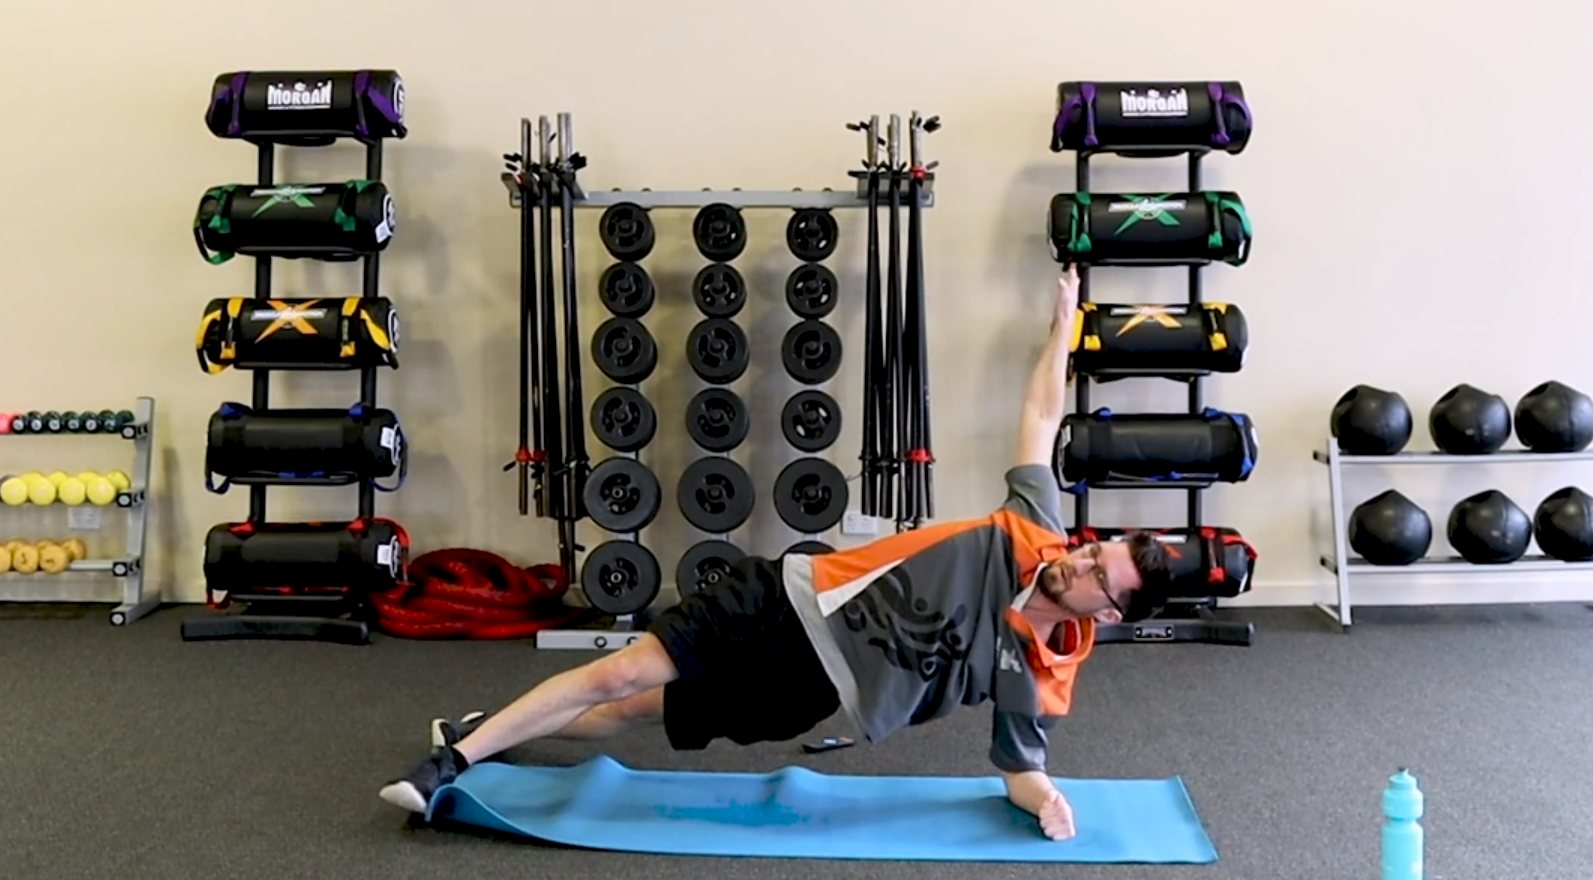 Gym Instructor Adam holding a side plank